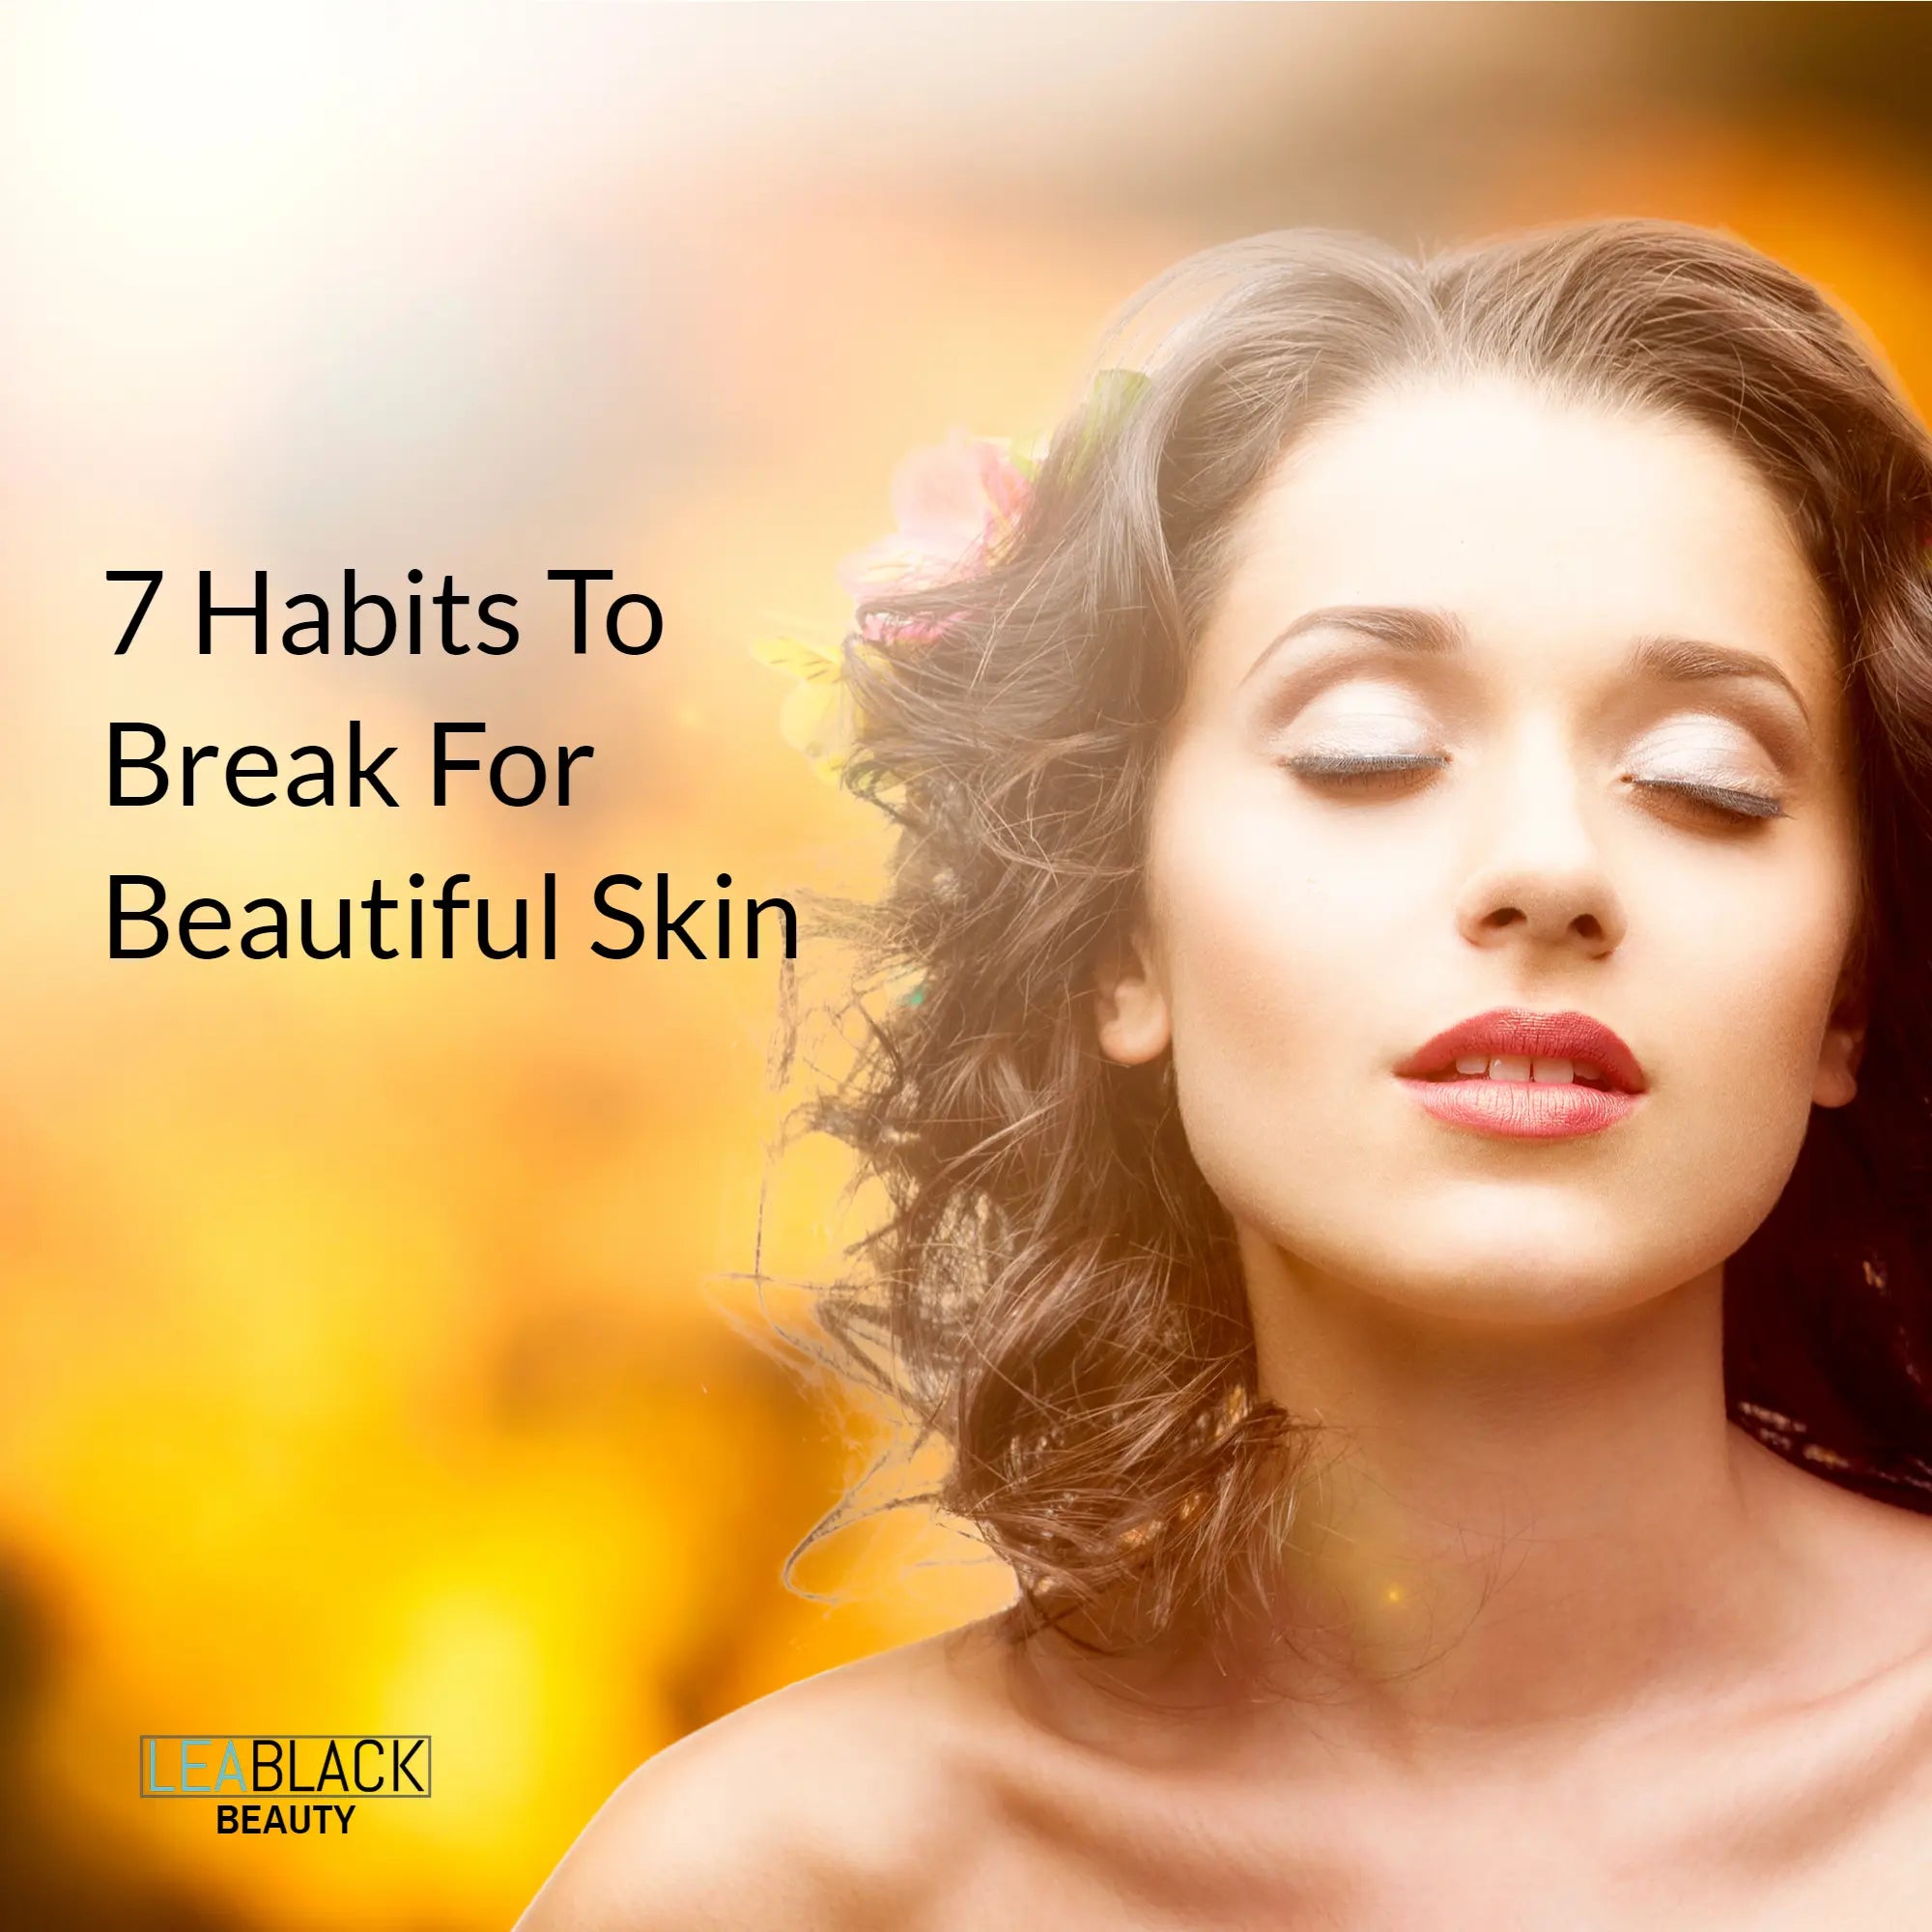 7 Habits to Break for Beautiful Skin